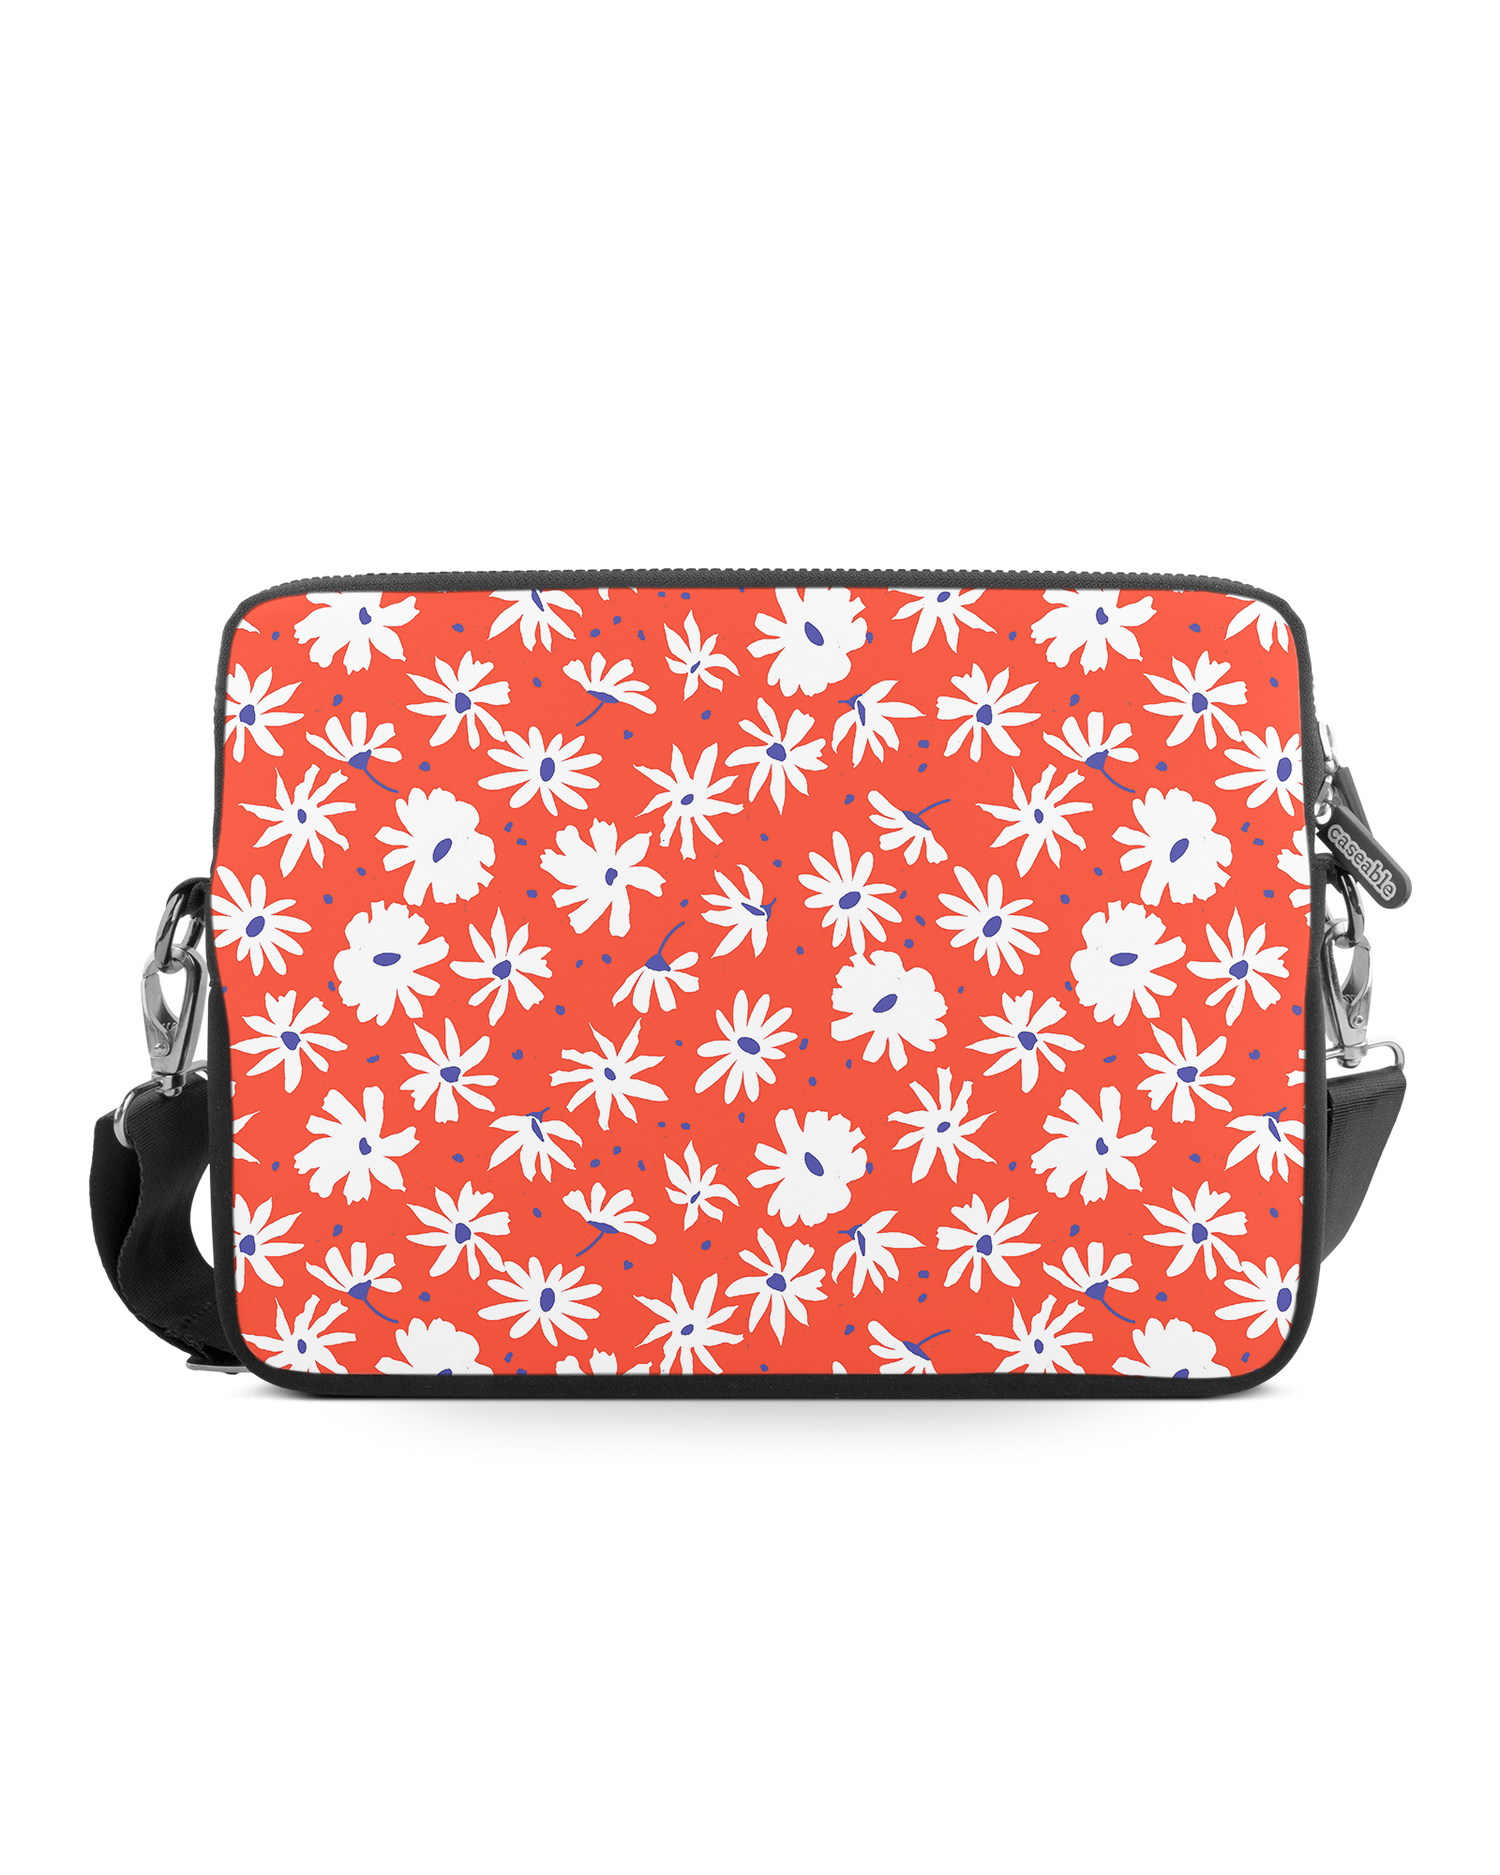 Retro Daisy Premium Laptop Bag 15 inch: Front View